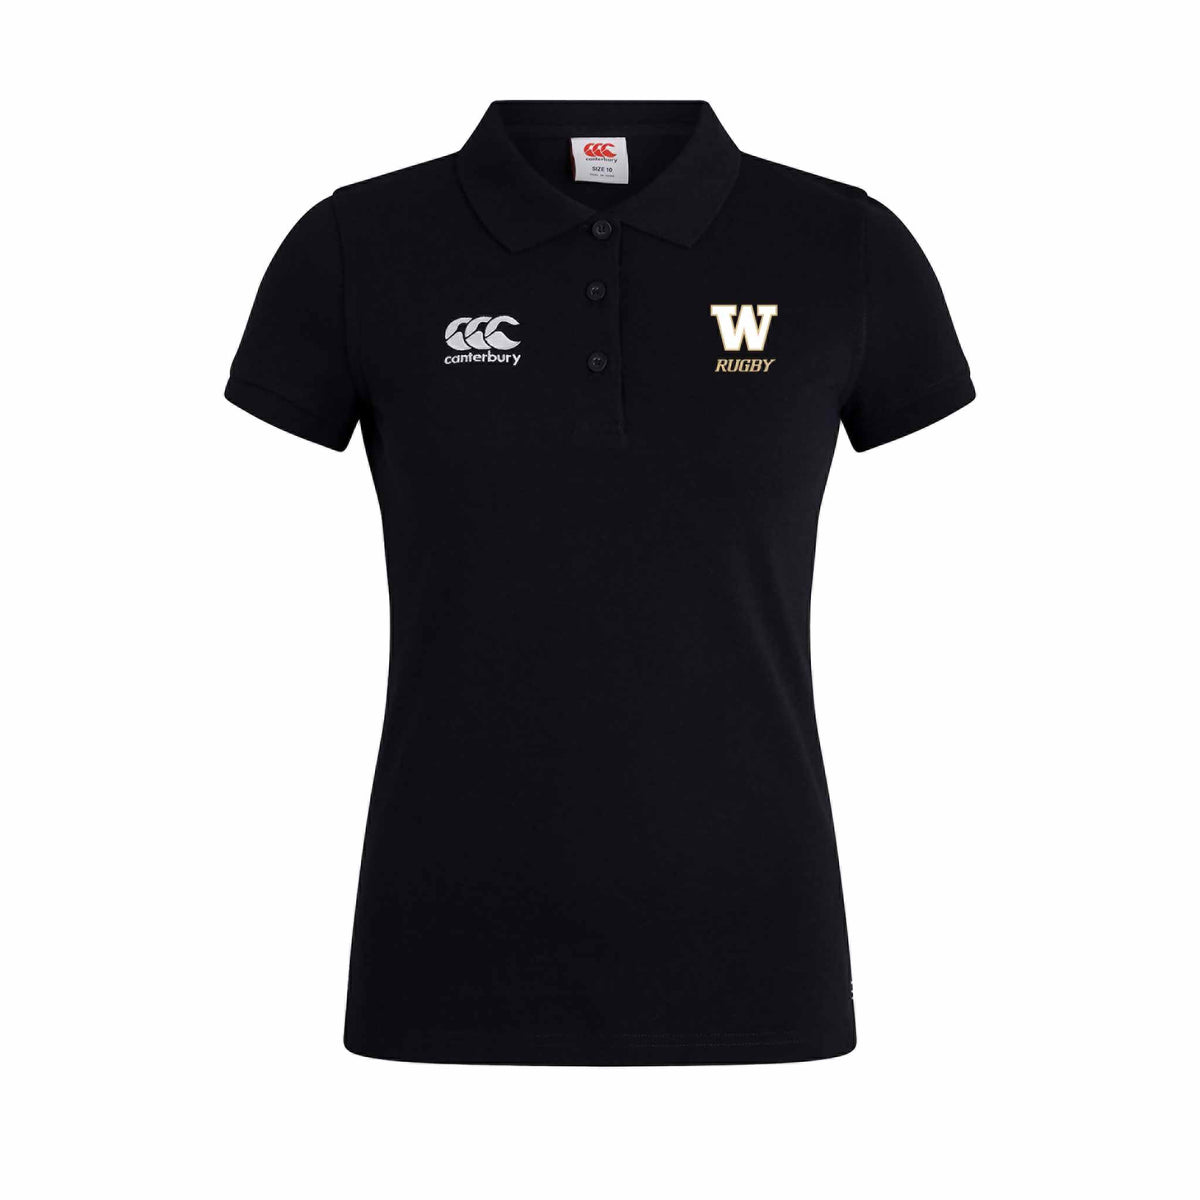 UW Women&#39;s Huskies Rugby Club Canterbury Waimak Polo Shirt - Womens - Black - The Rugby Shop The Rugby Shop Womens / BLACK / 6 TRS Distribution Canada POLO UW Women&#39;s Huskies Rugby Club Canterbury Waimak Polo Shirt - Womens - Black